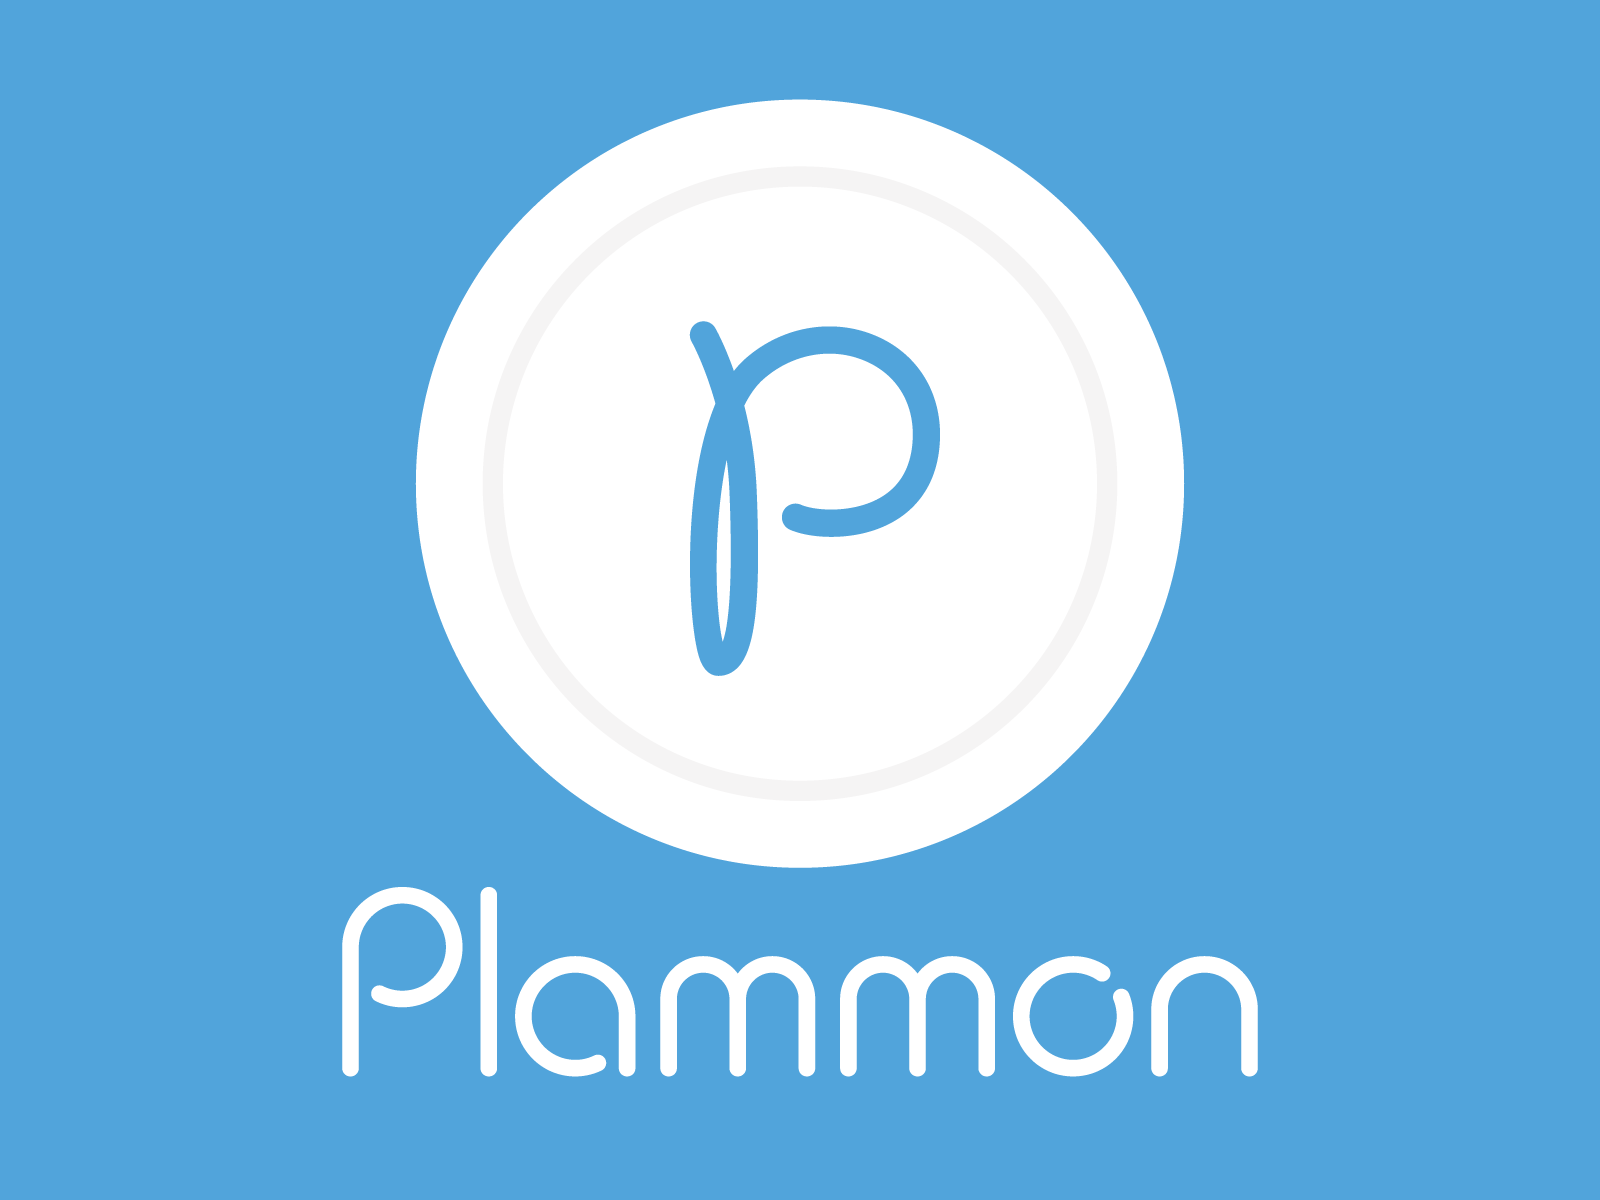 【Plammon】
ログイン情報(認証)だけを一元管理する無料クラウドサービス